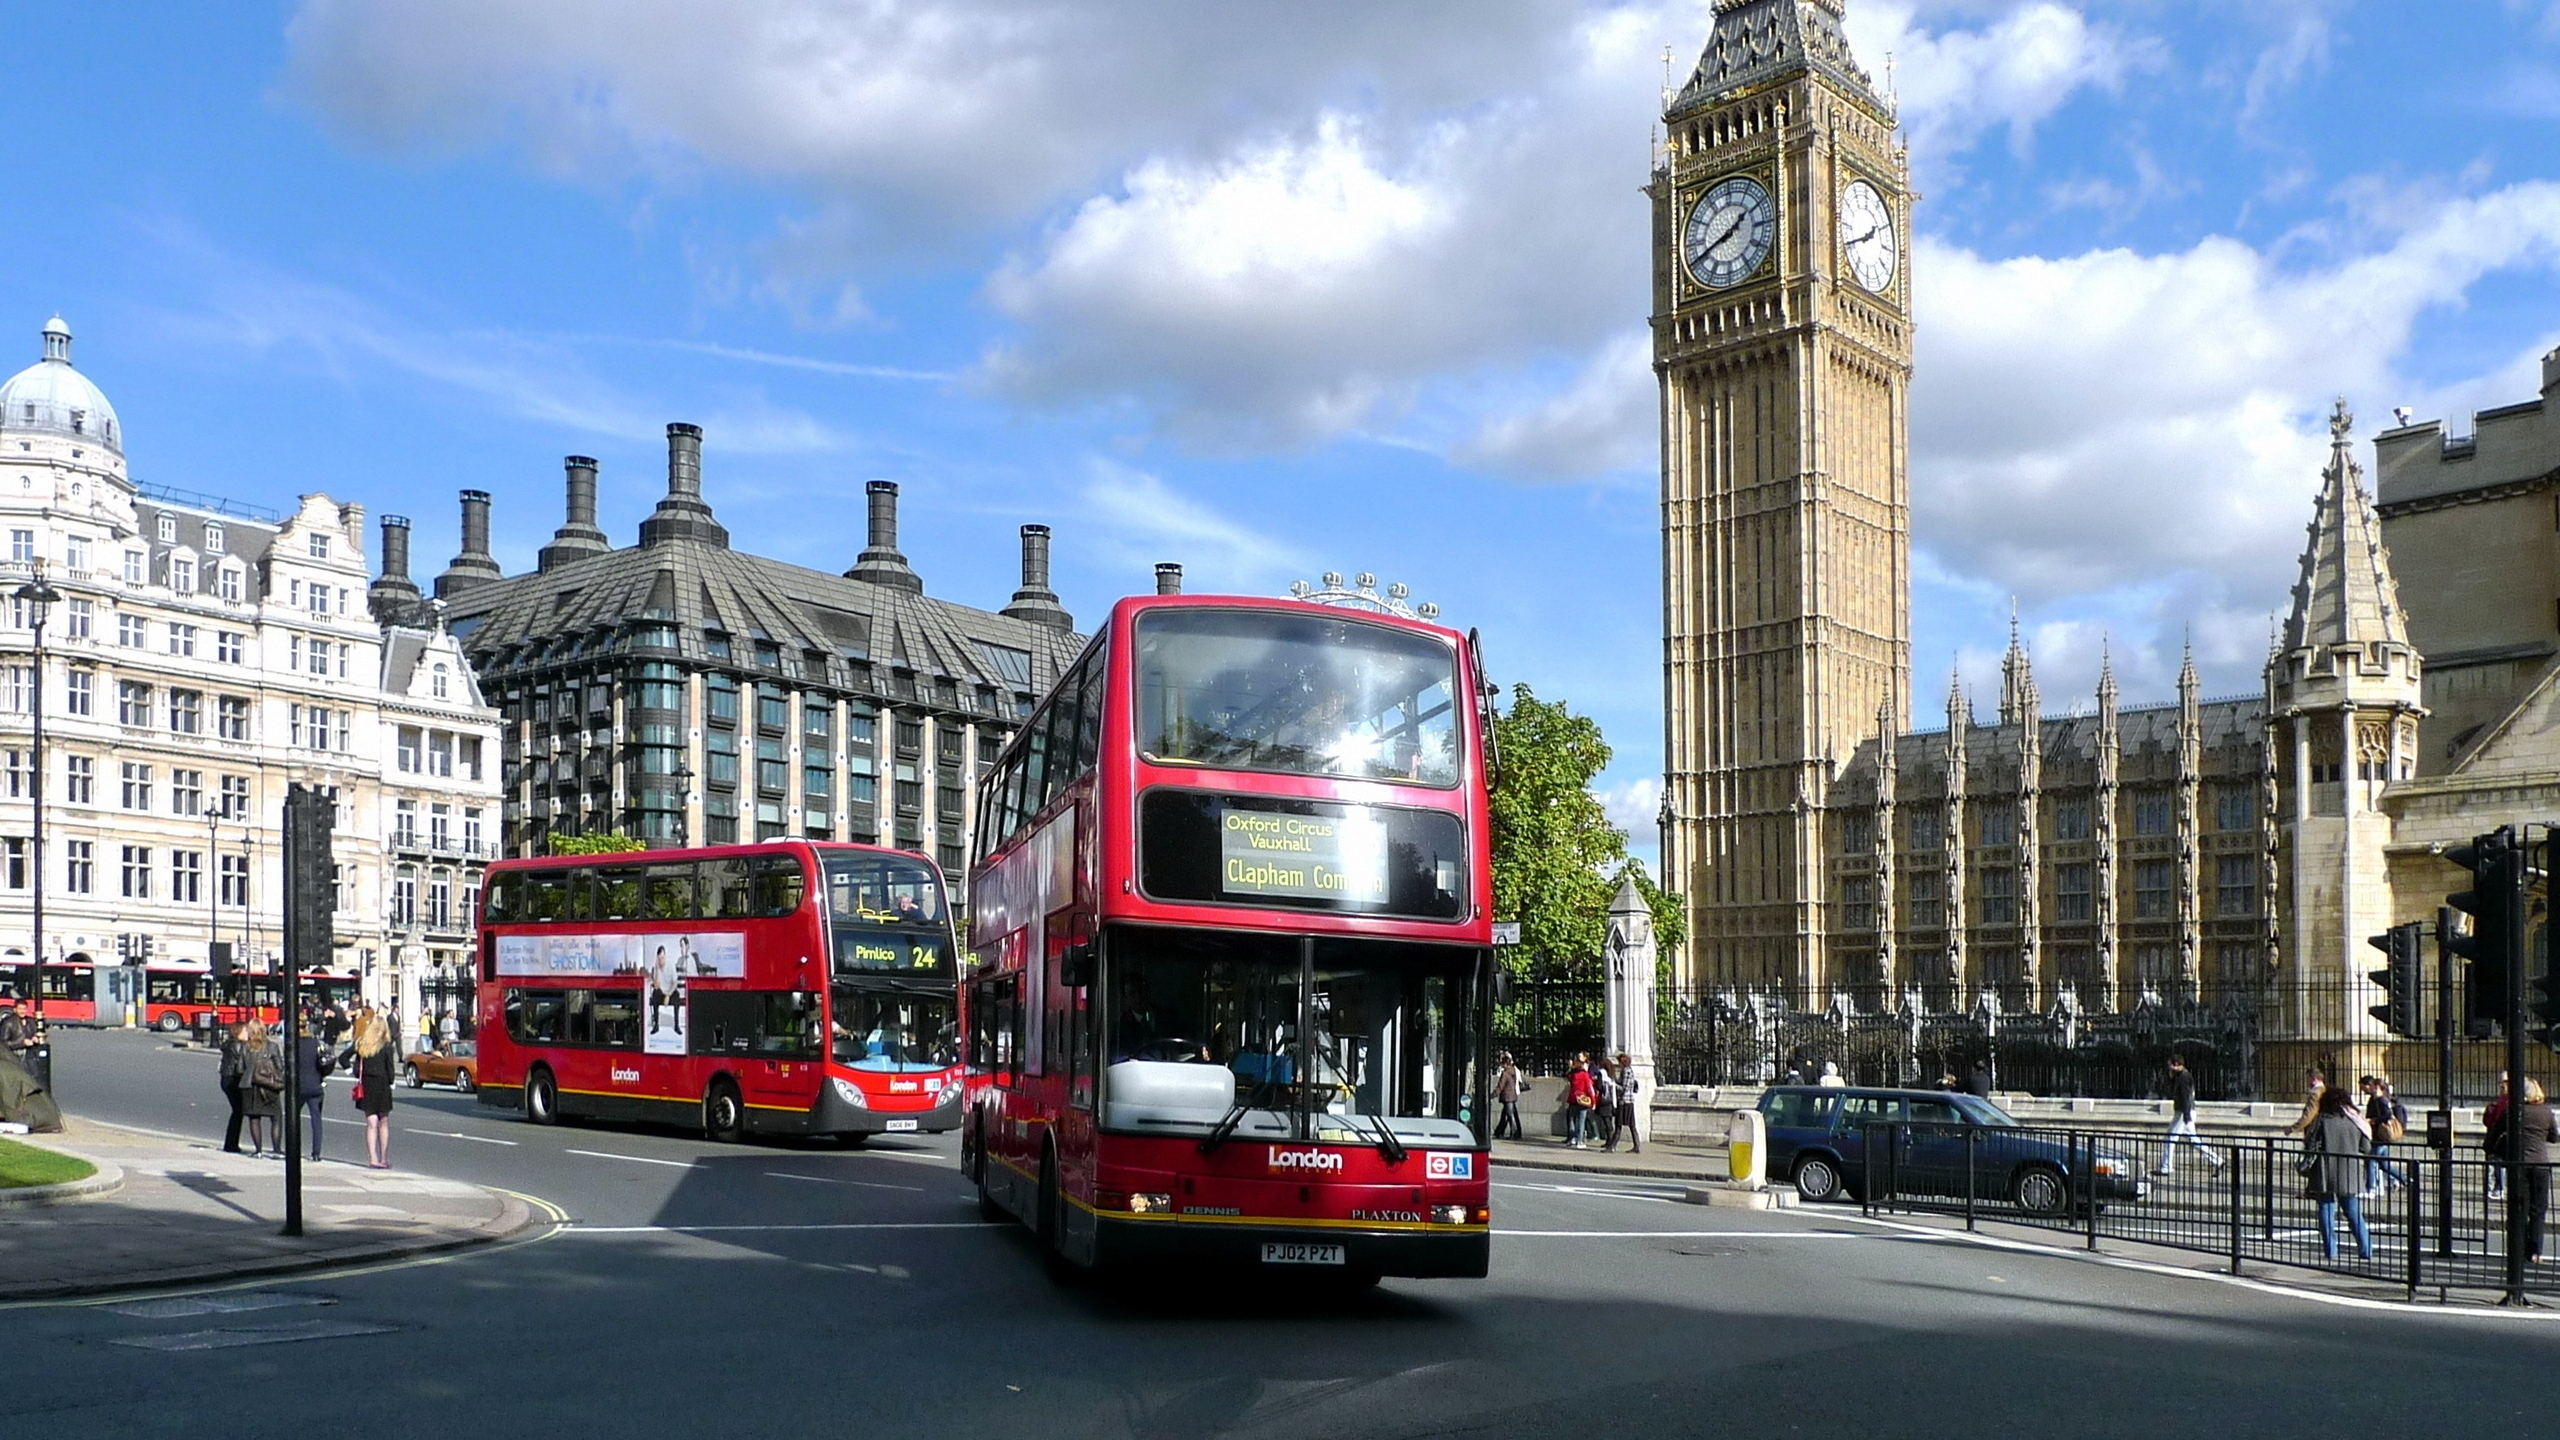 London Buses for 2560x1440 HDTV resolution